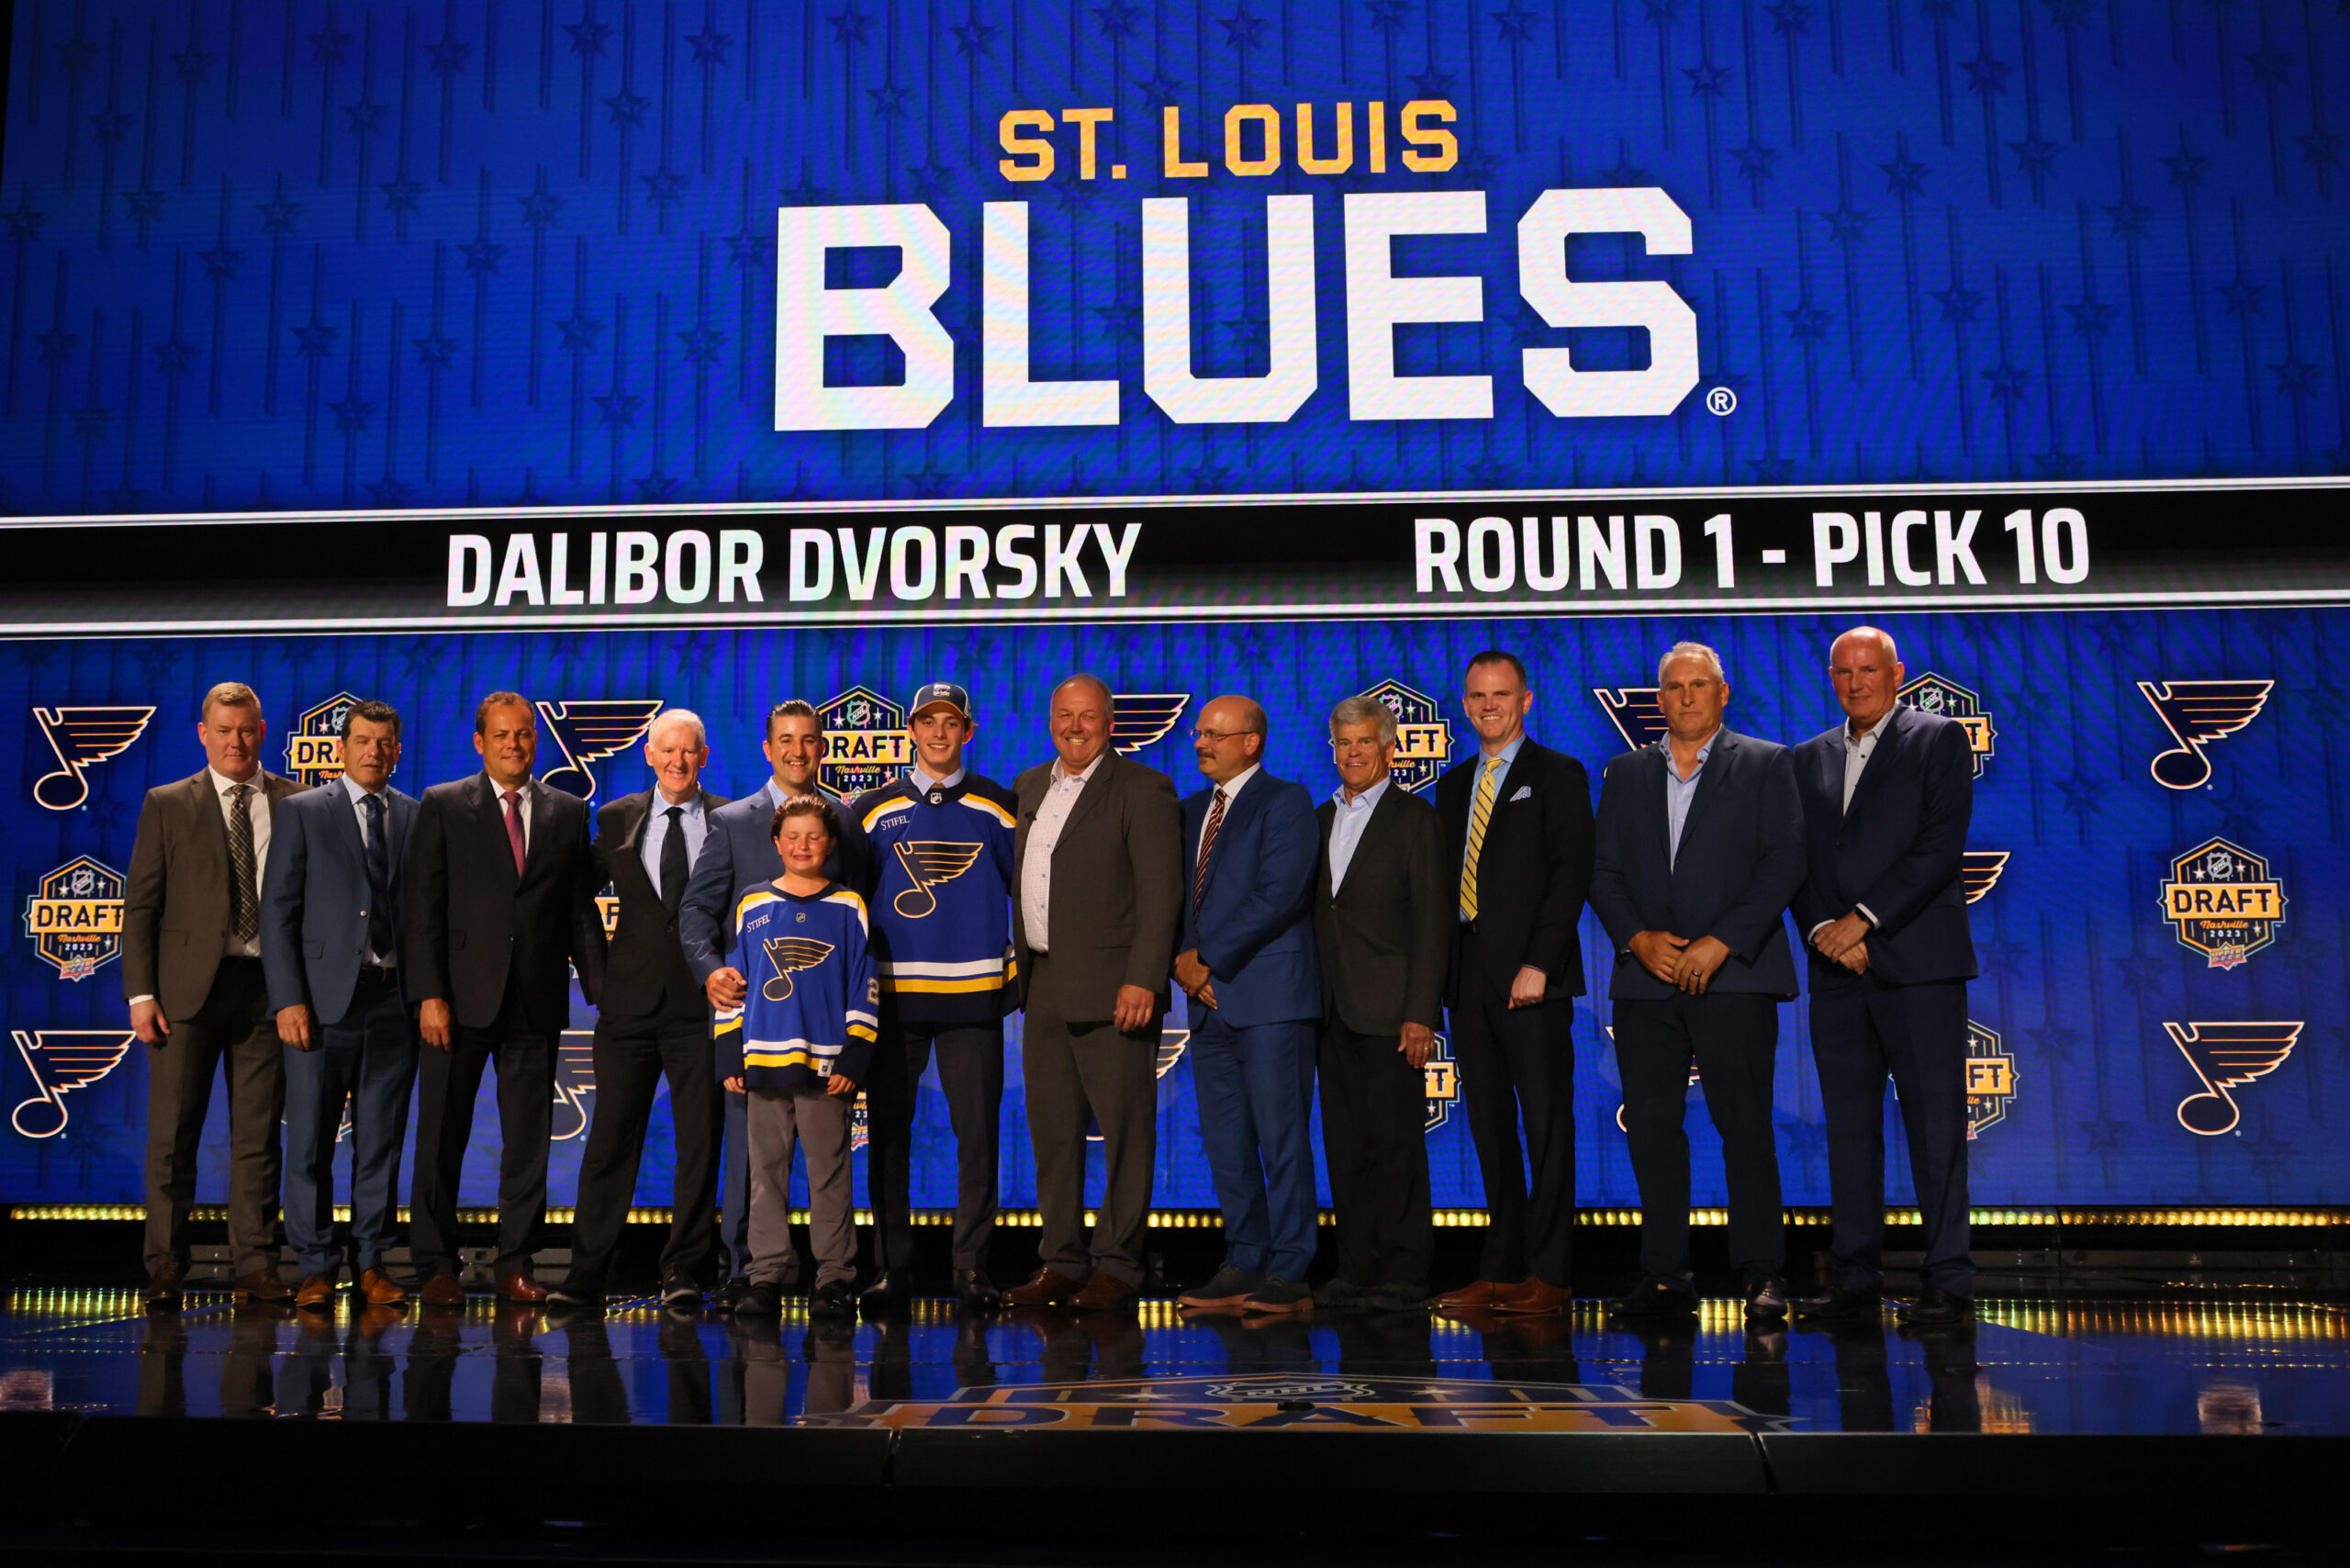 2023-24 NHL Season Preview: St. Louis Blues - The Hockey News